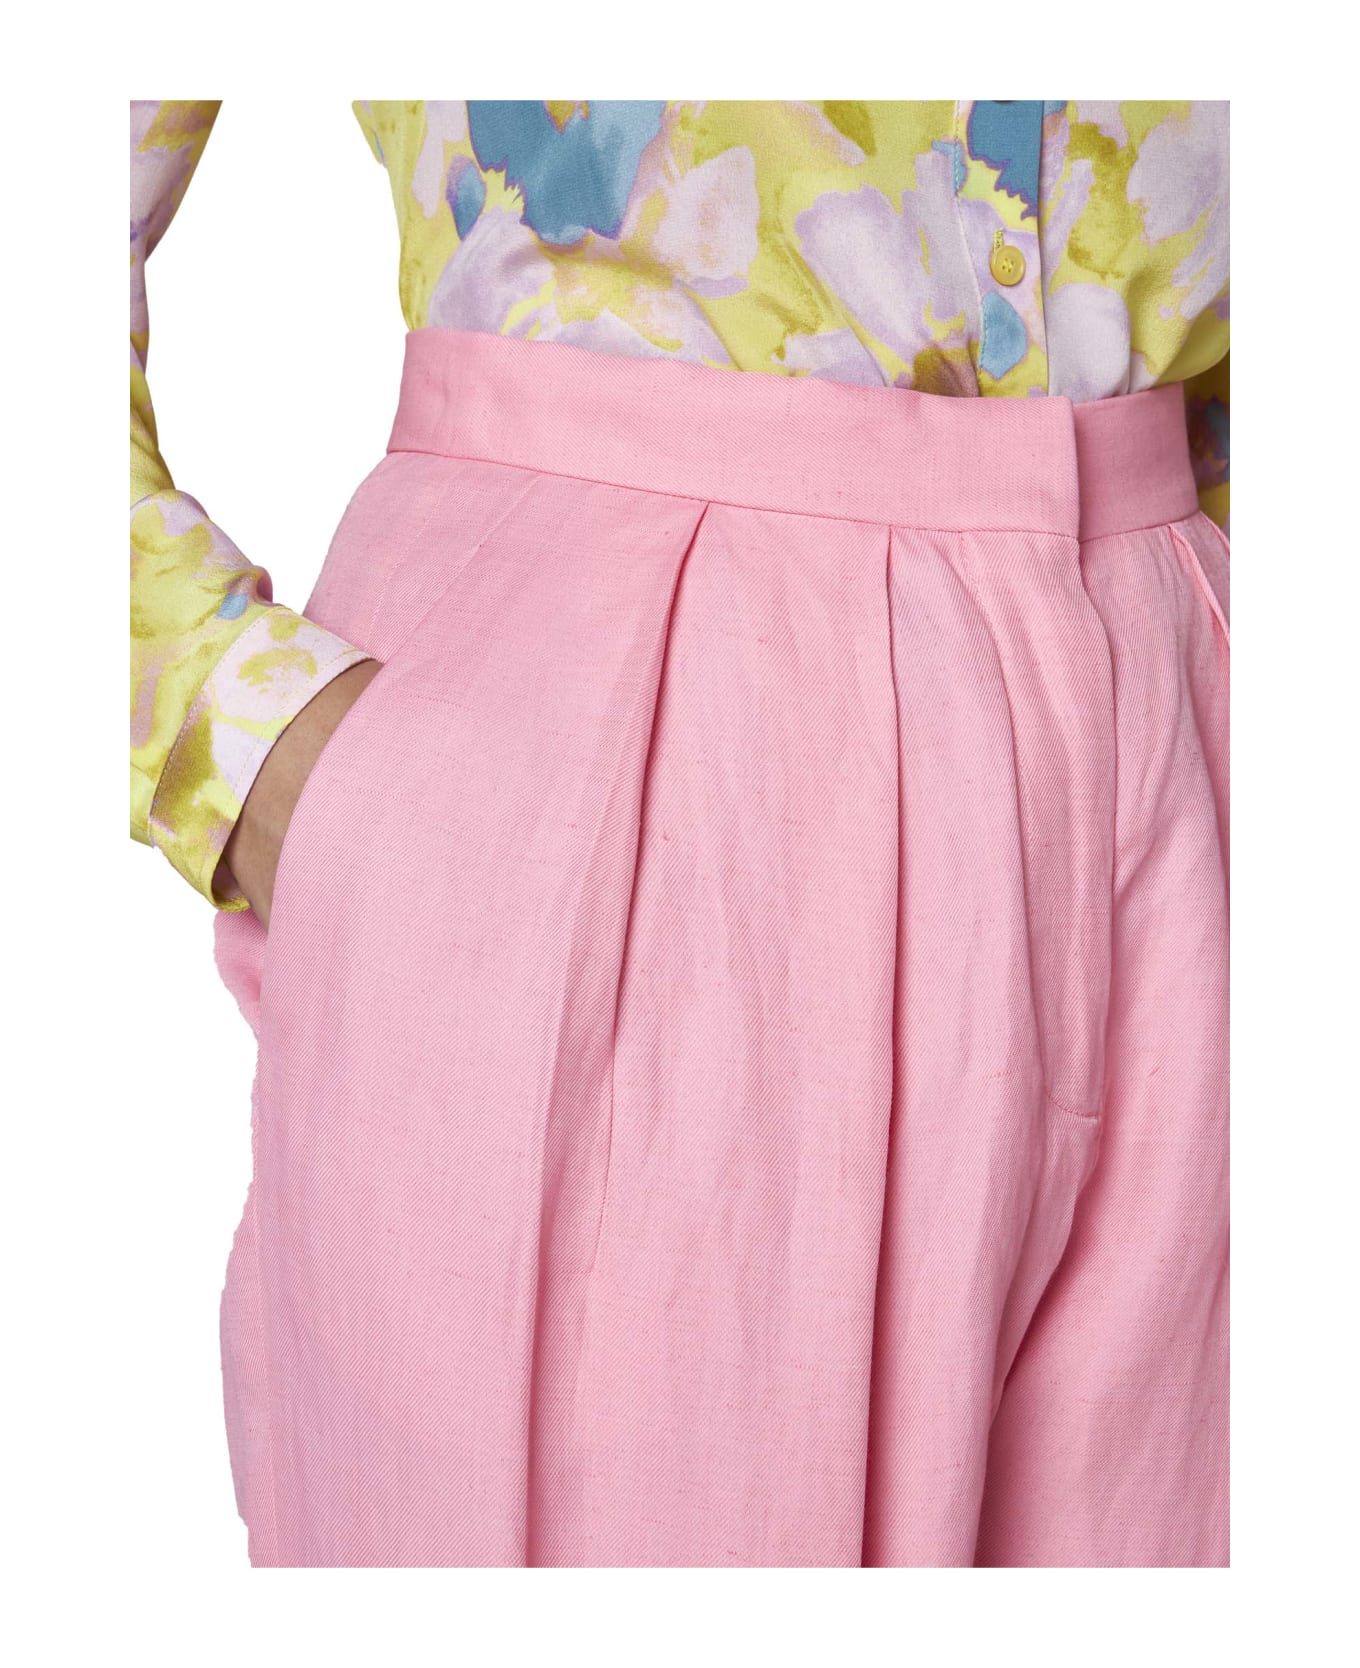 Stella McCartney Pleated Trousers - HIBISCUS (Pink) スウェットパンツ